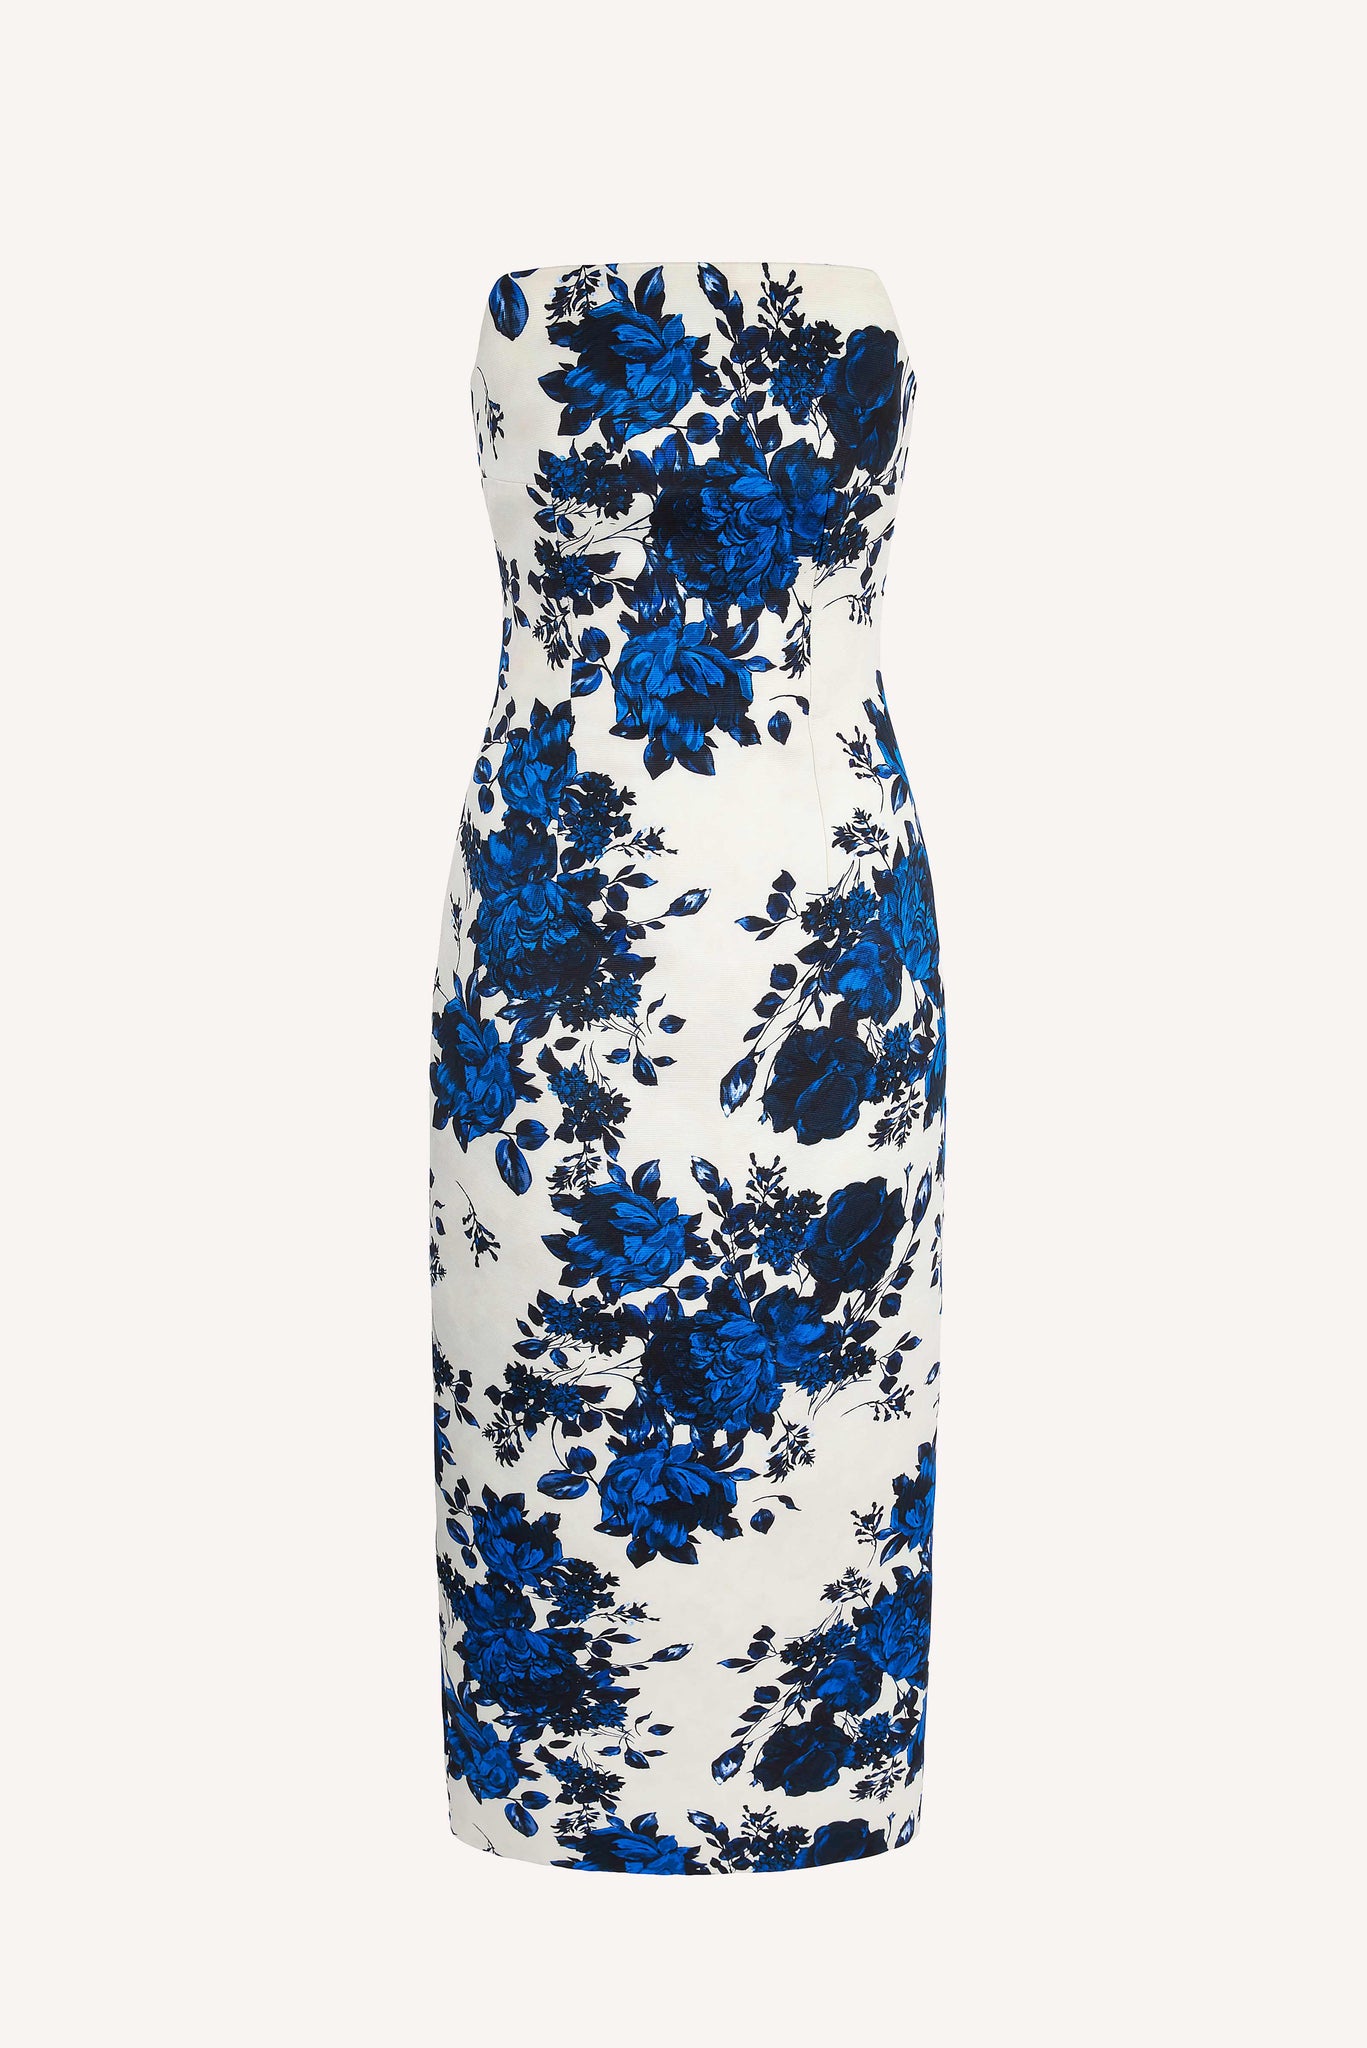 Yulie Strapless Dress in Blue Floral Printed Taffeta Faille | Emilia Wickstead